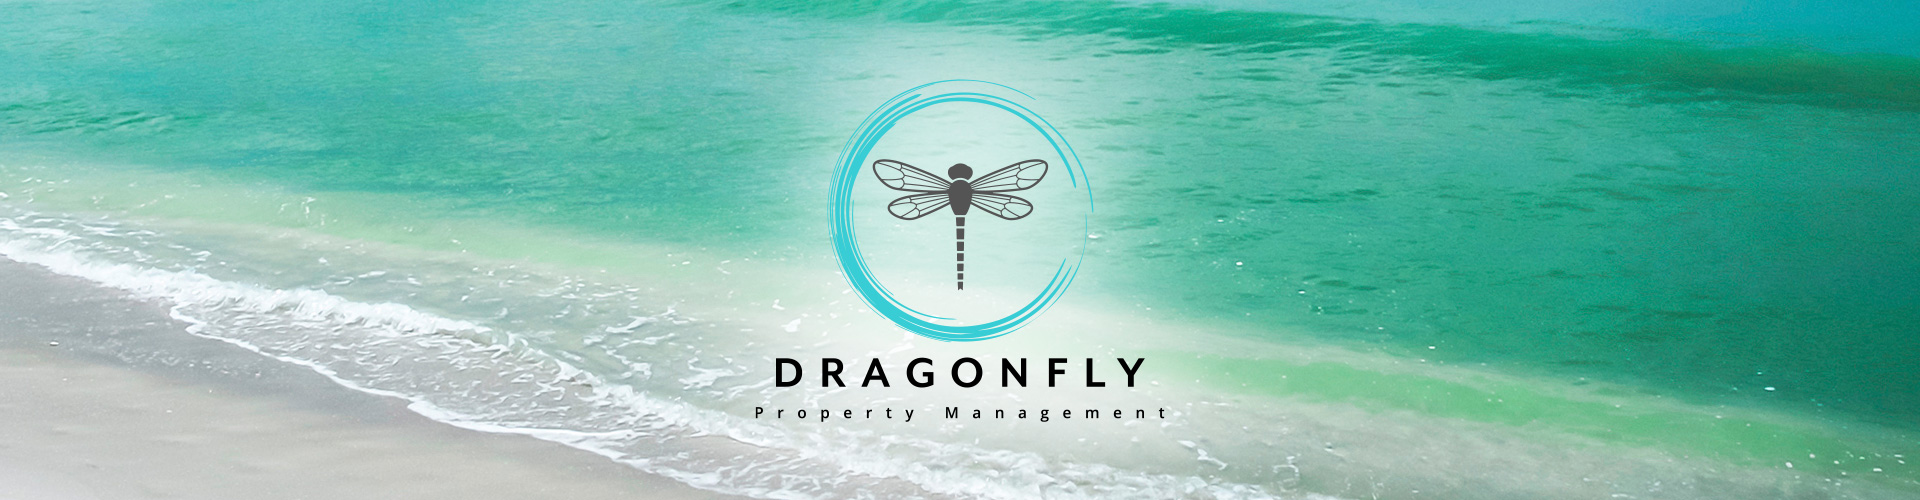 Dragonfly Property Management Banner